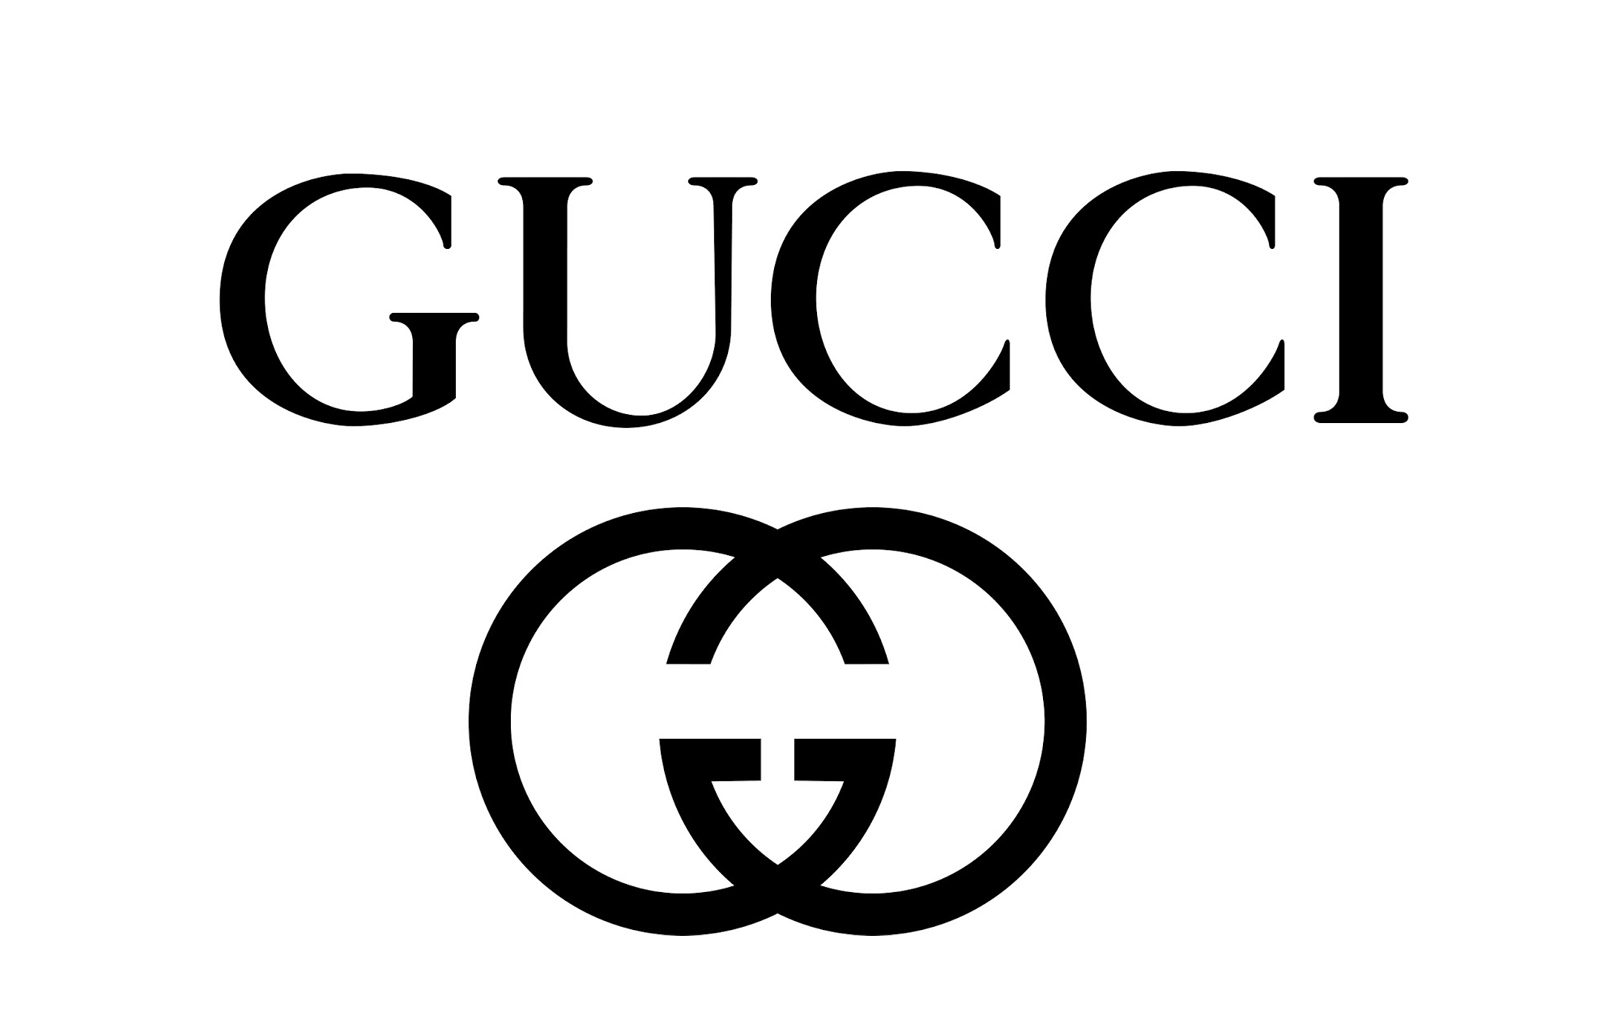 Cucchi Logo photo - 1